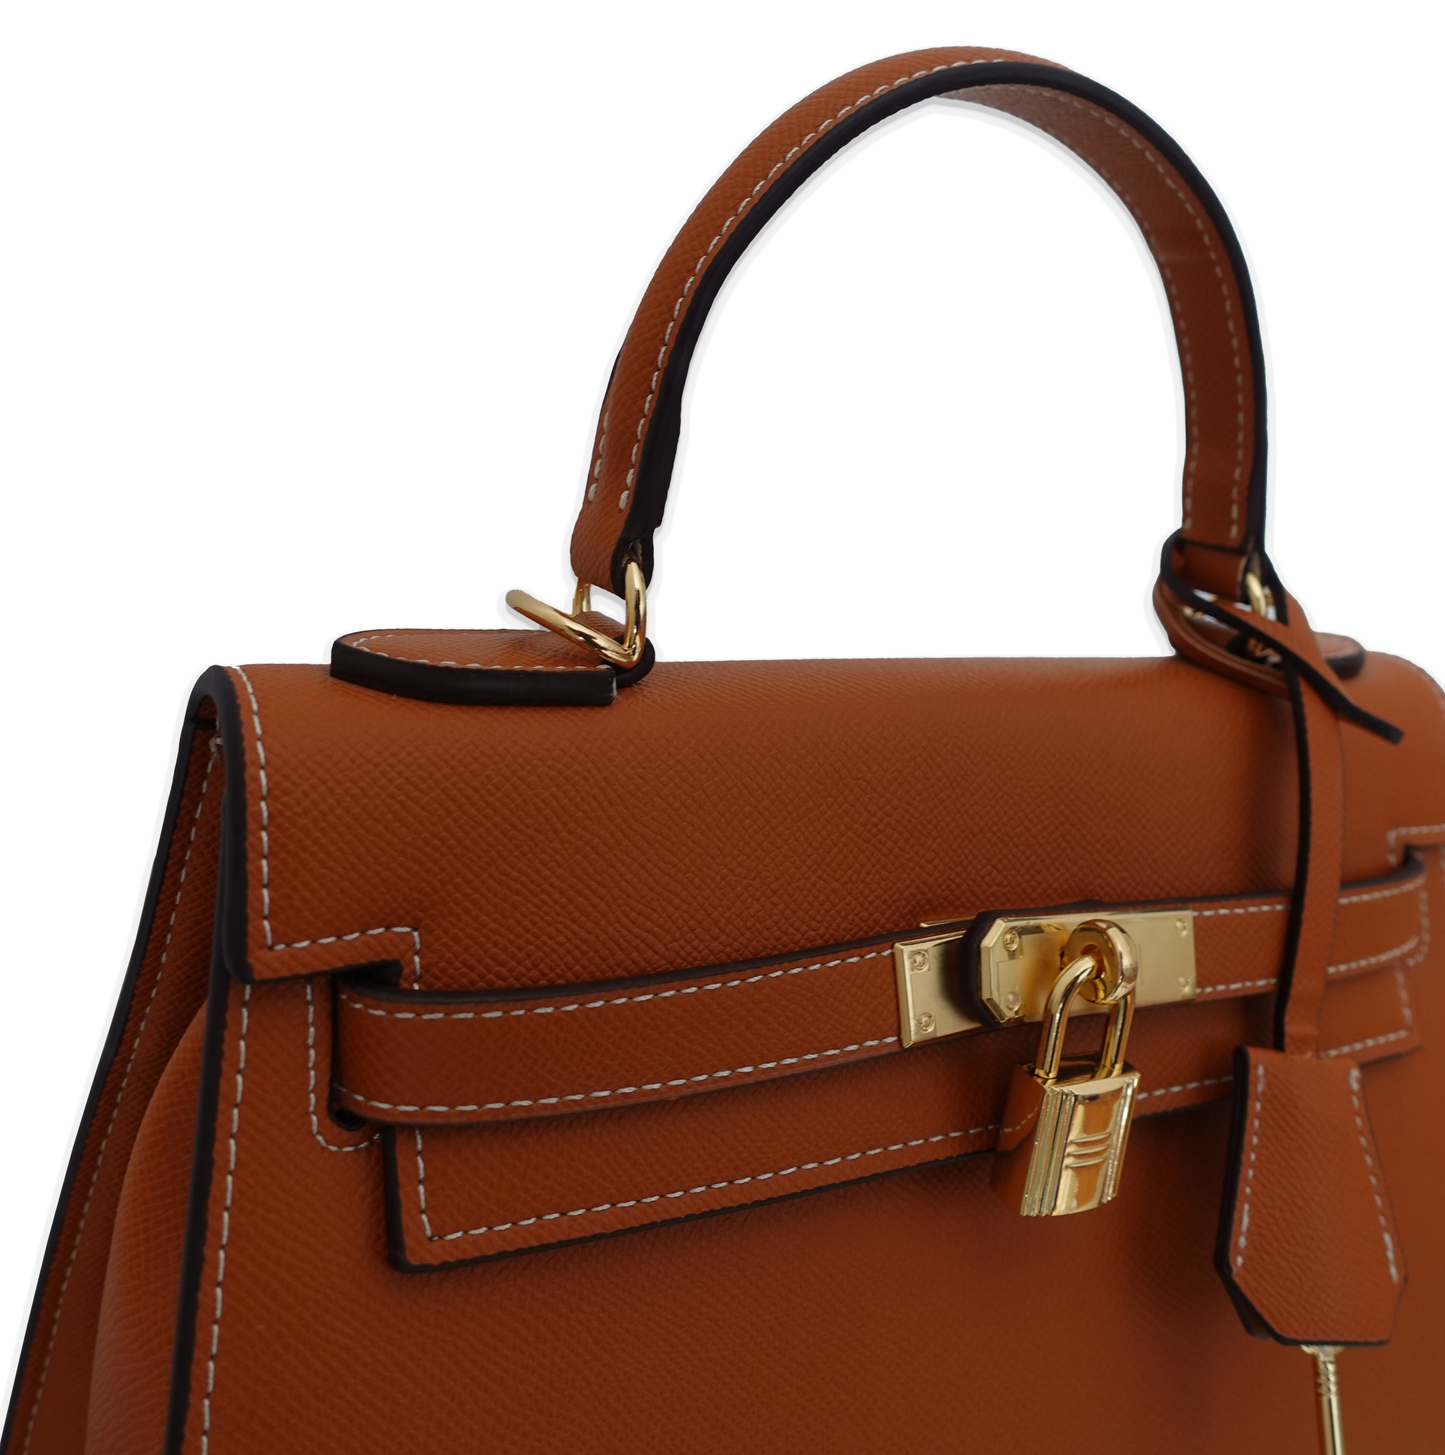 Sofia | Luxury Vegan Leather Handbag | Tan